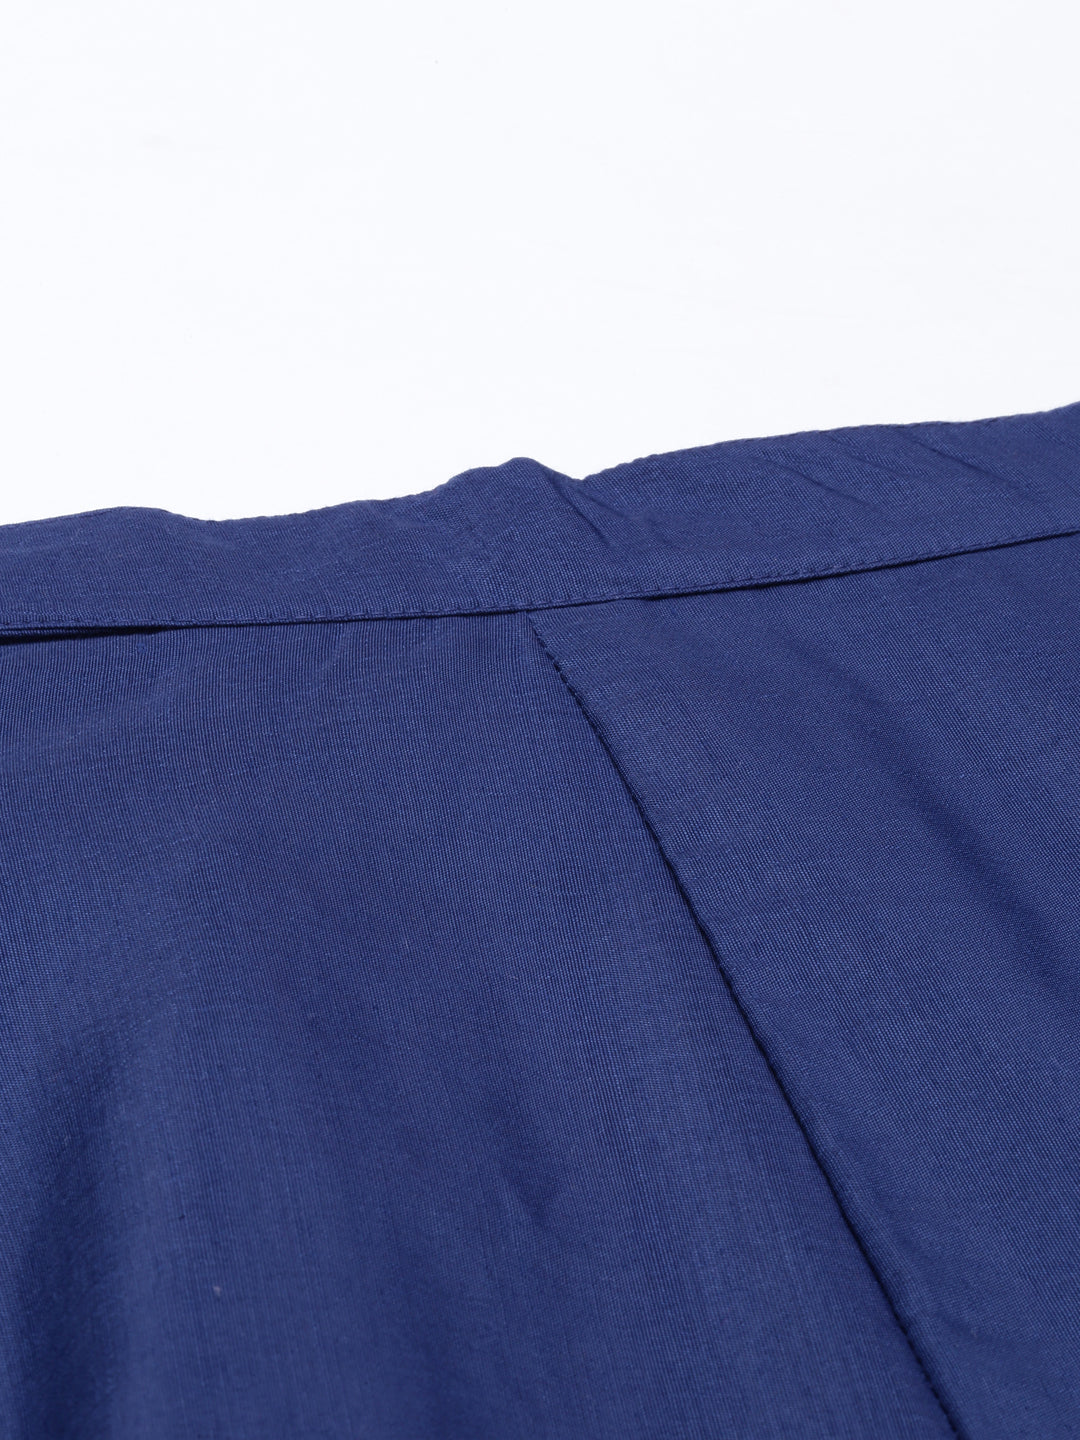 Neeru's Blue Color Santoon Fabric Plazzo